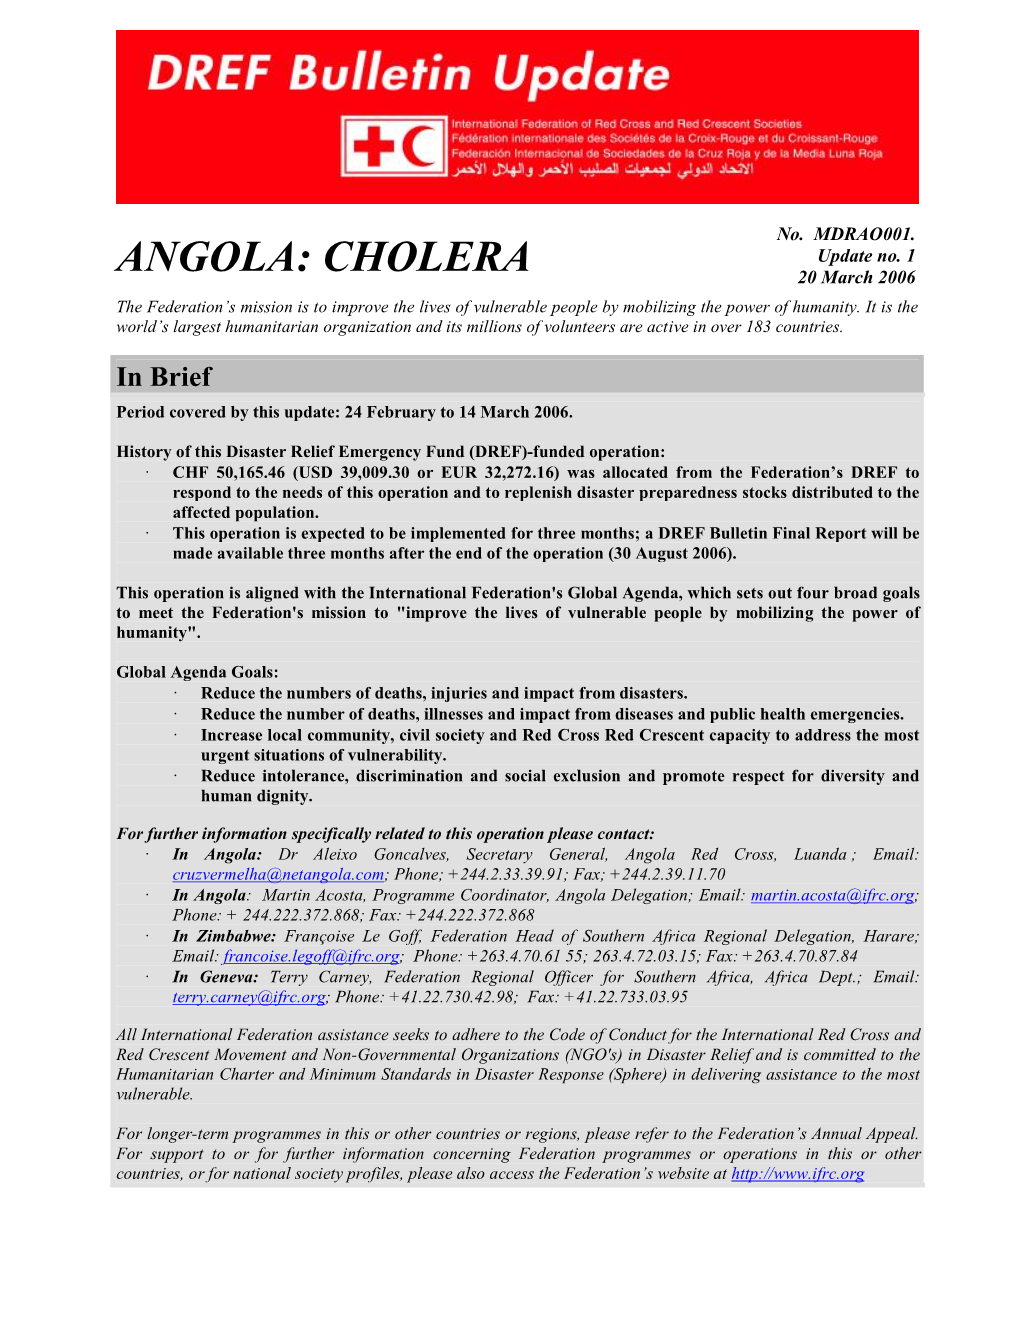 Angola: Cholera; DREF Bulletin No. MDRAO001; Update No